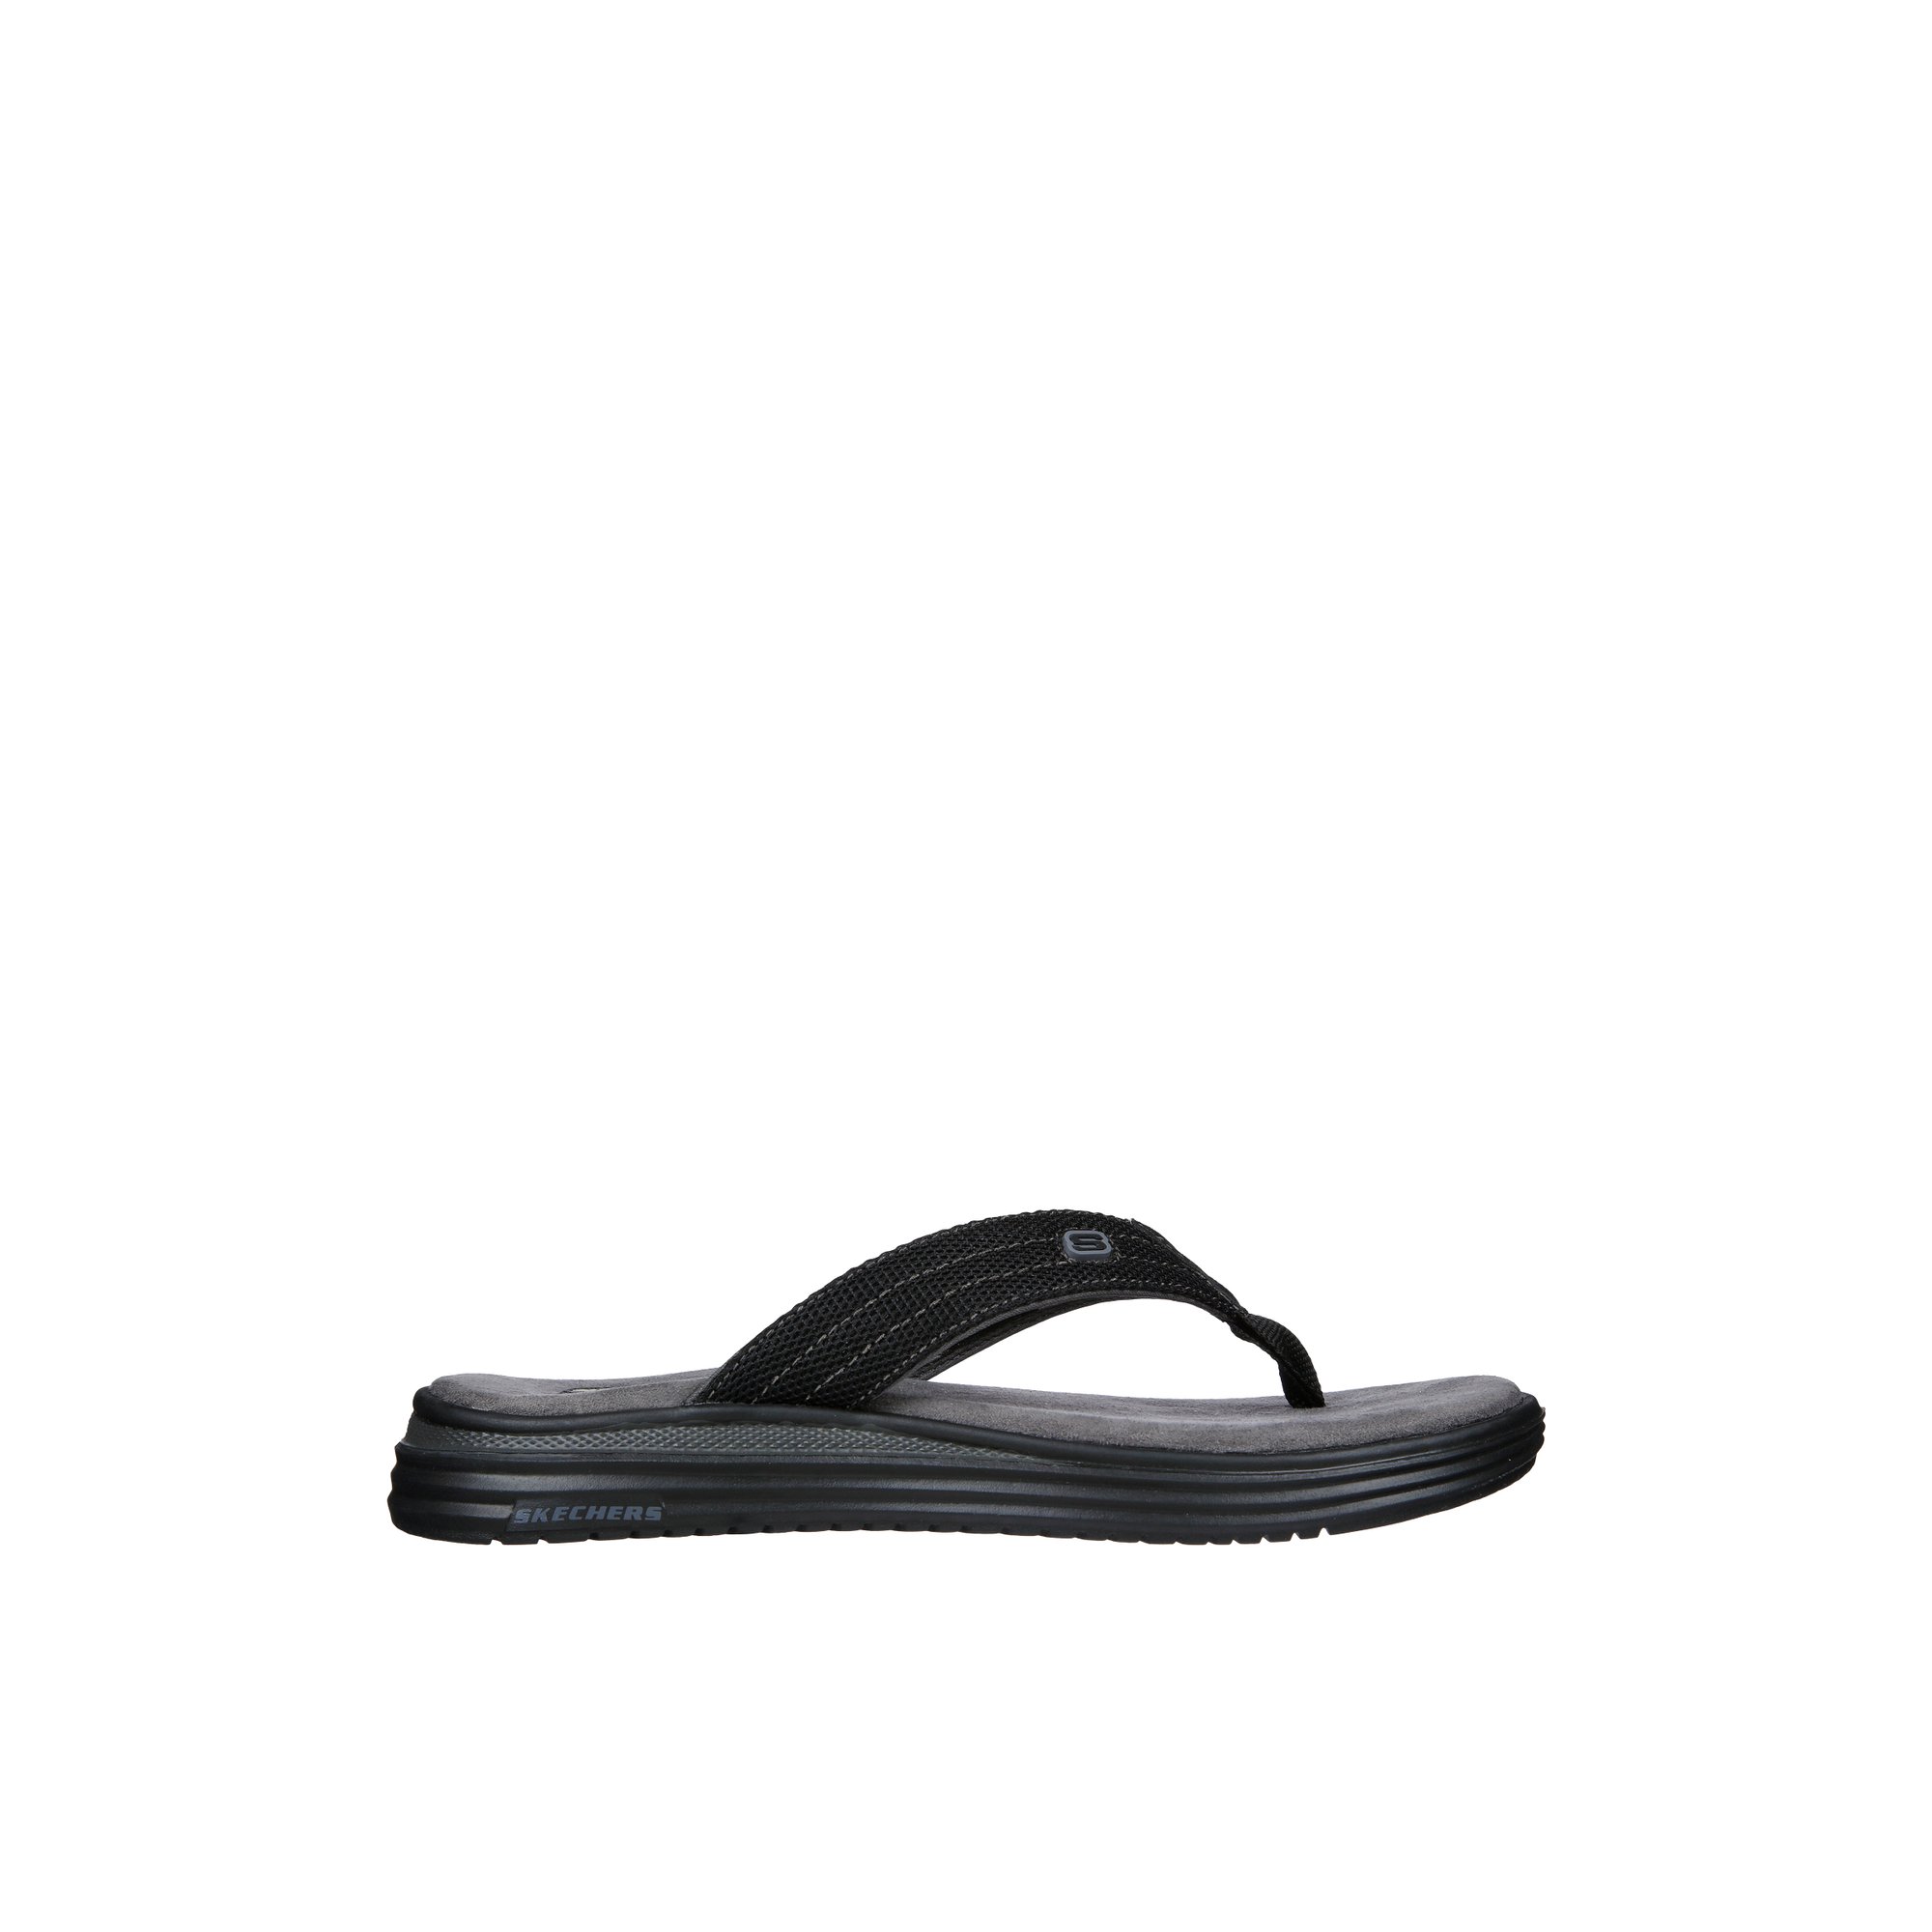 Skechers Prove Baylis - Men's Footwear Sandals Black